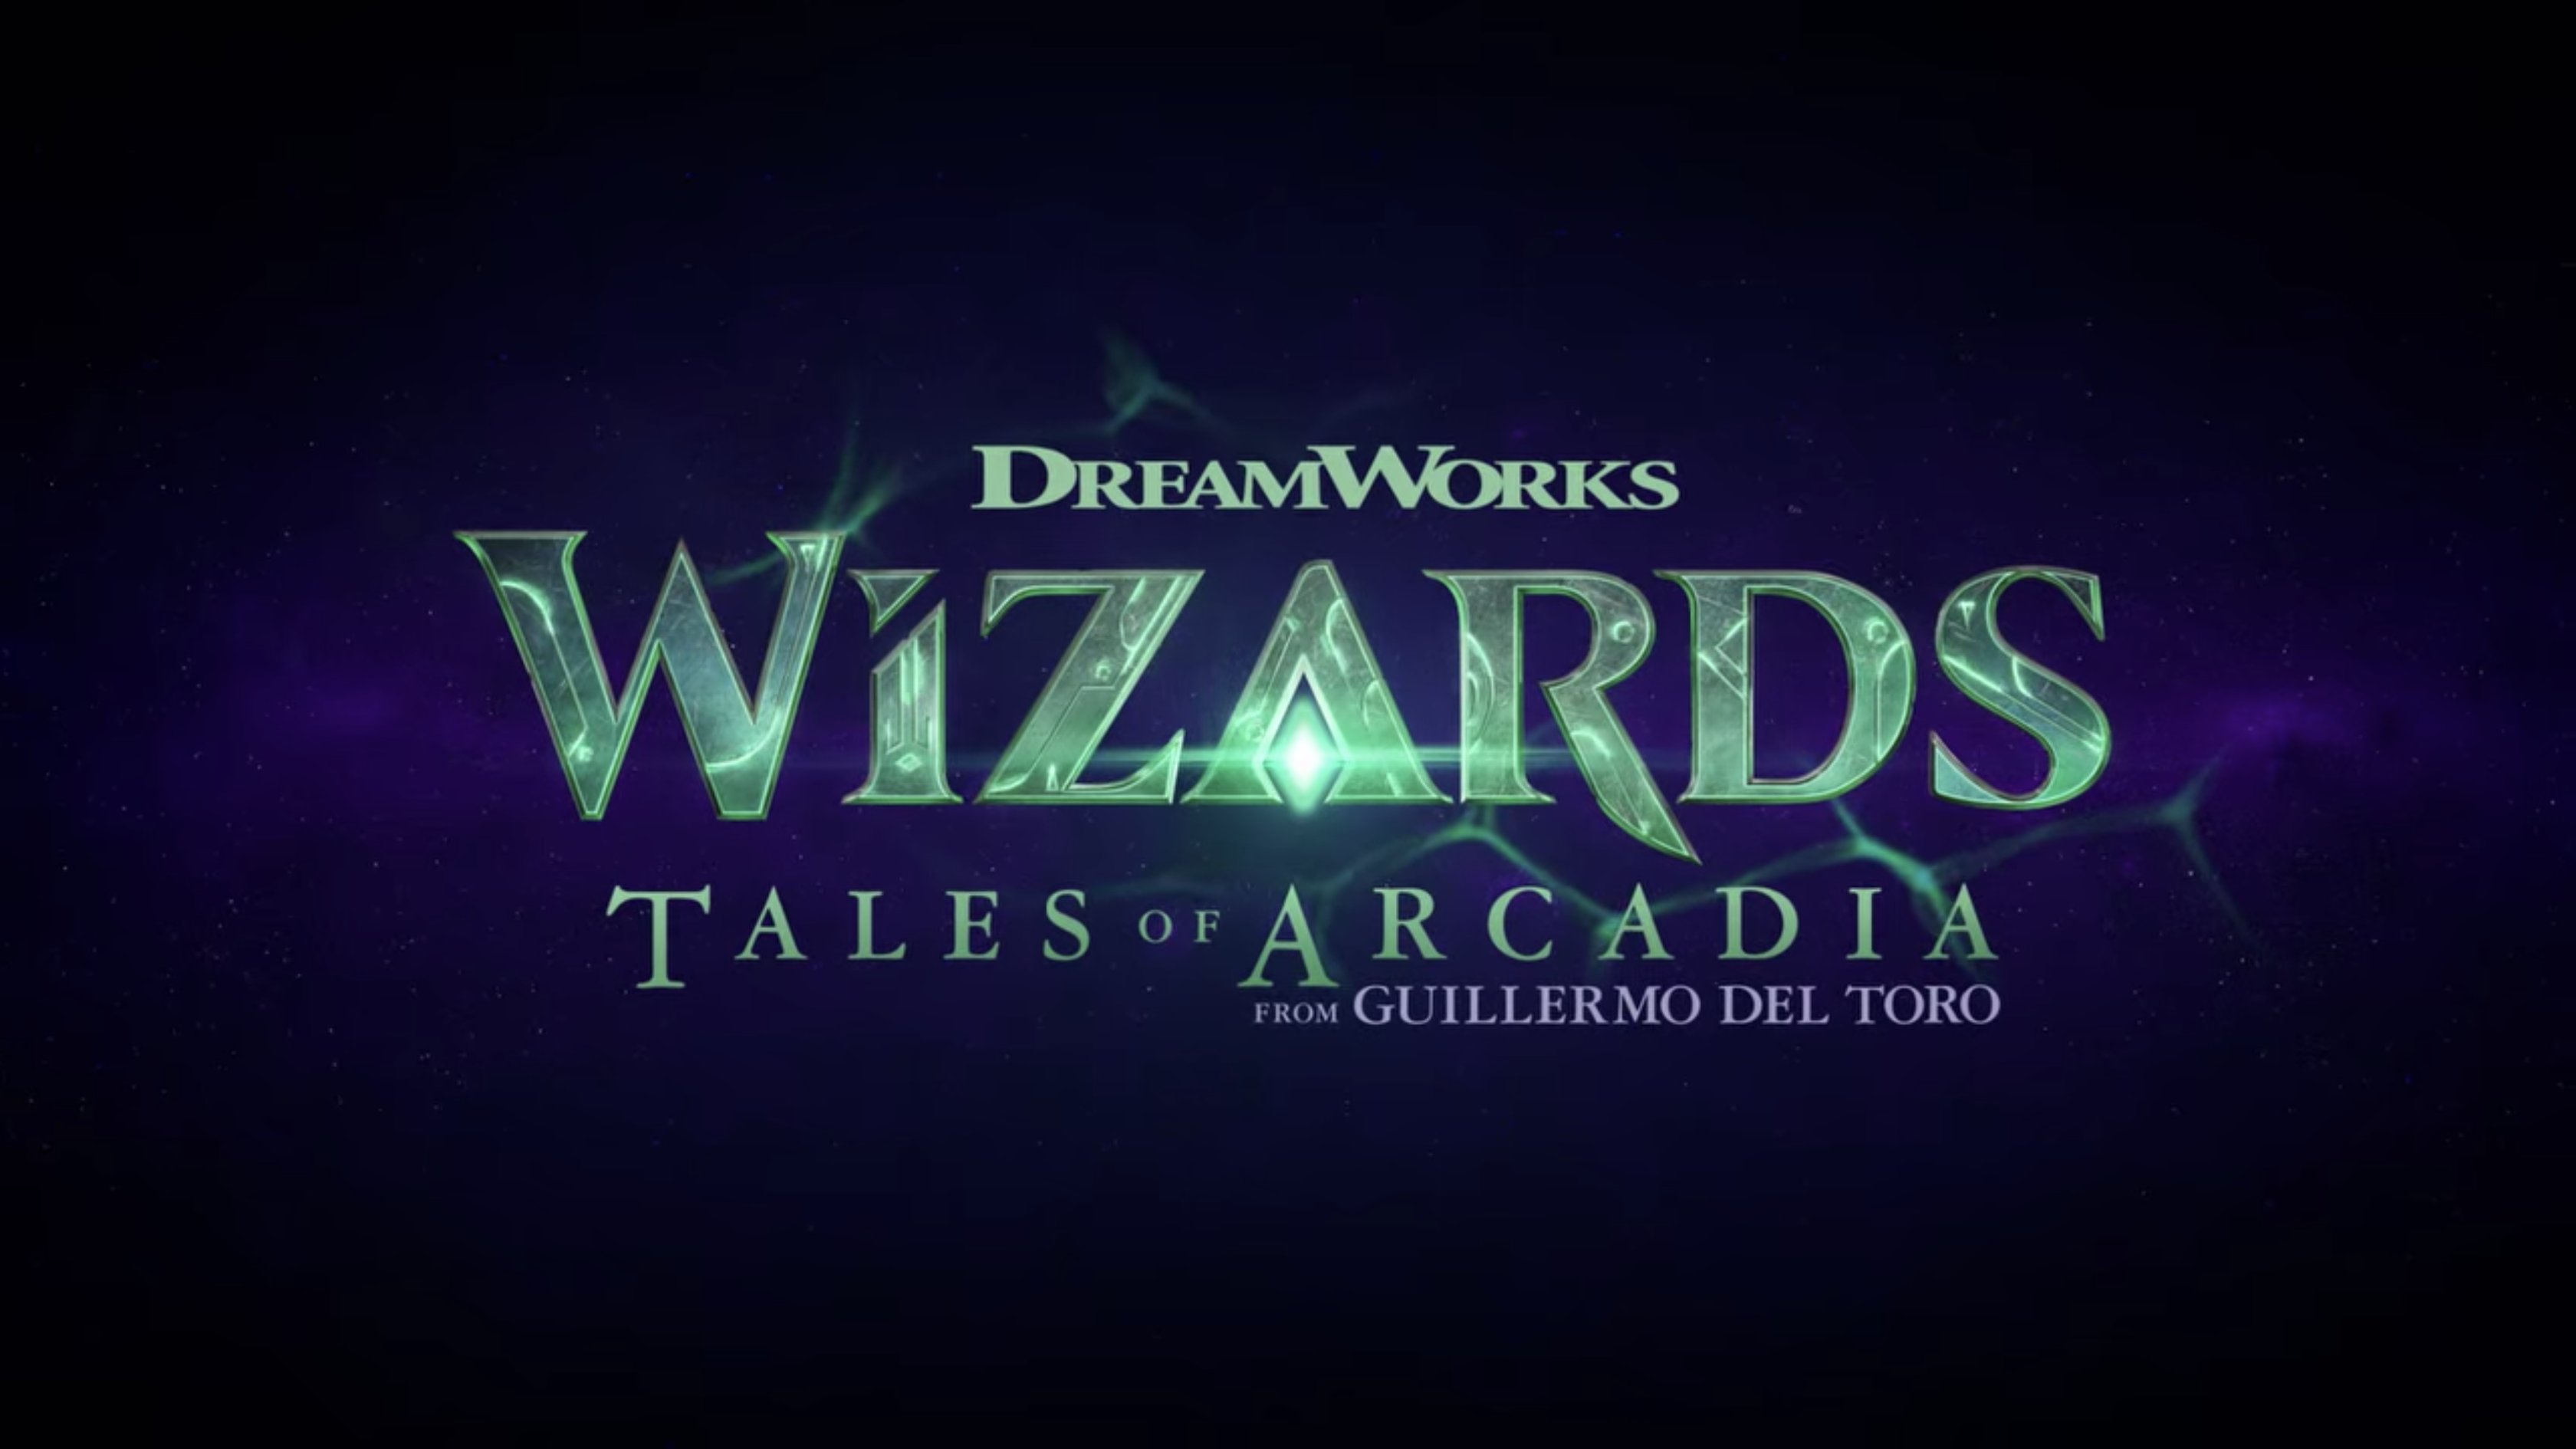 История чародея. Волшебники истории Аркадии. Wizards Tales of Arcadia.